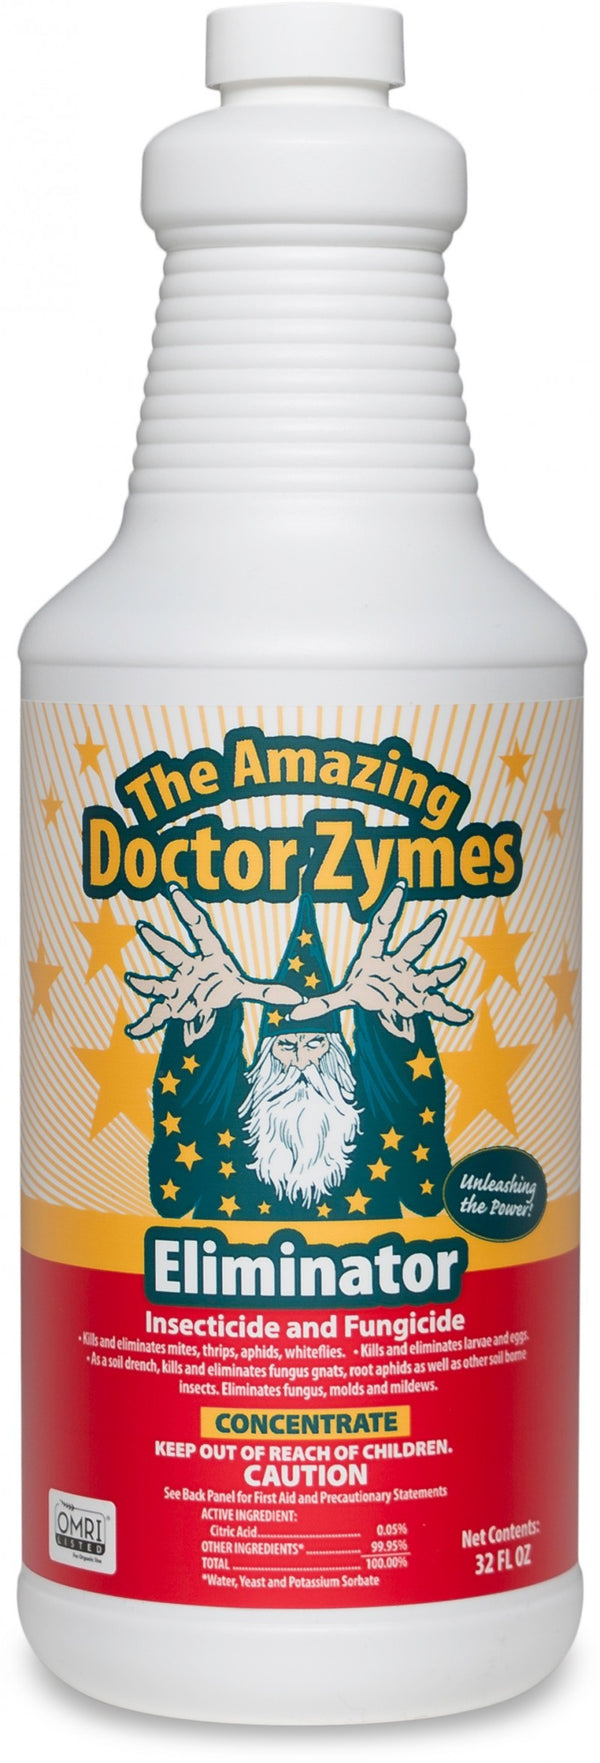 Doctor Zymes Eliminator